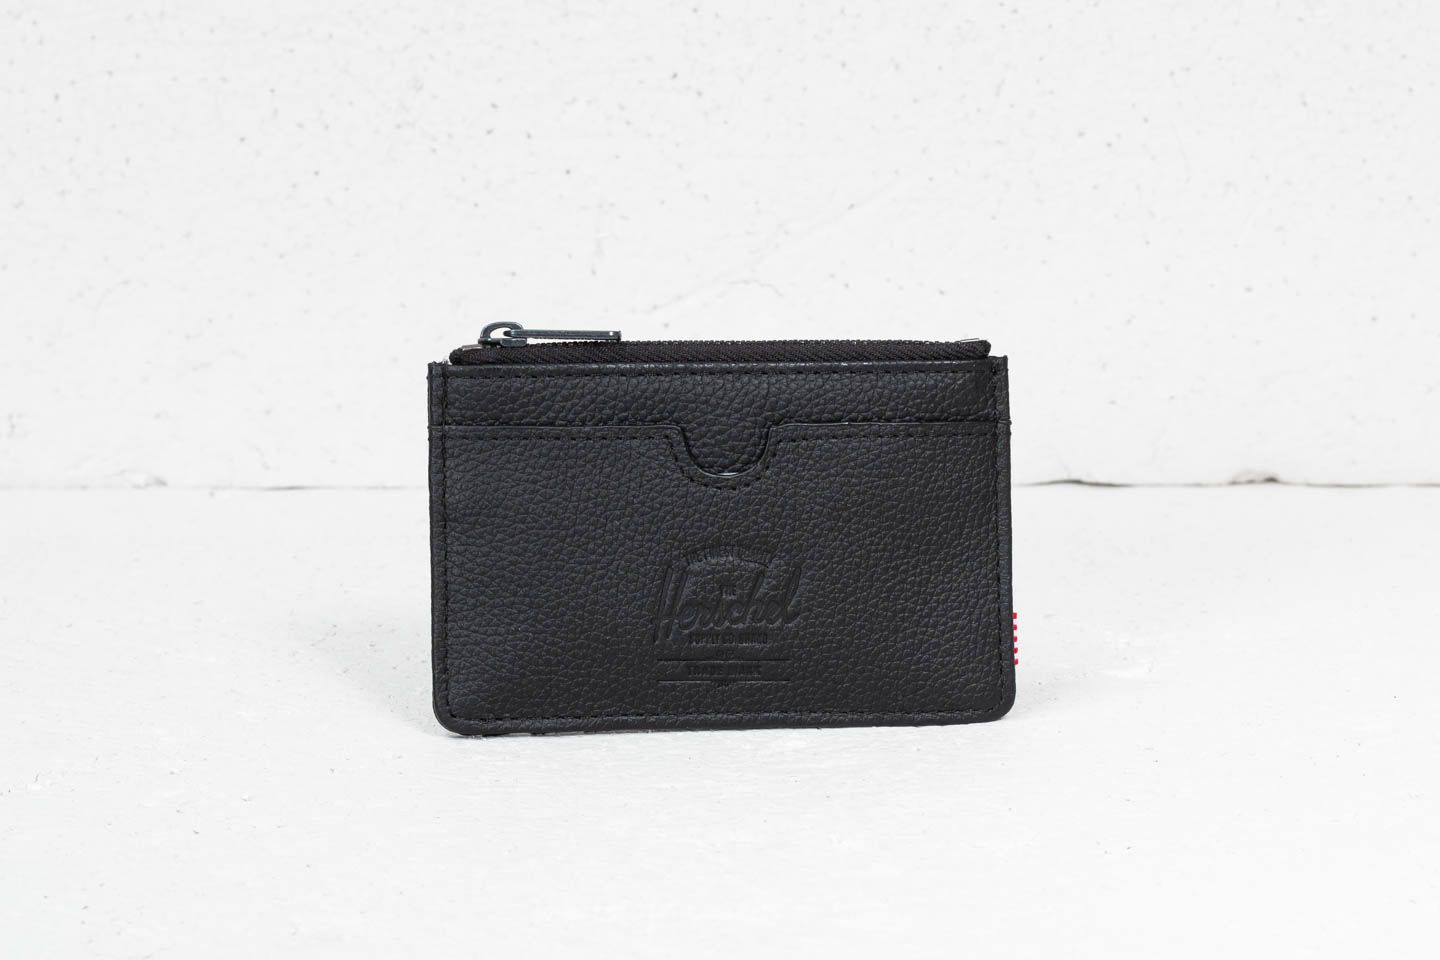 Portfele Herschel Supply Co. Oscar Wallet Black Pebbled Leather